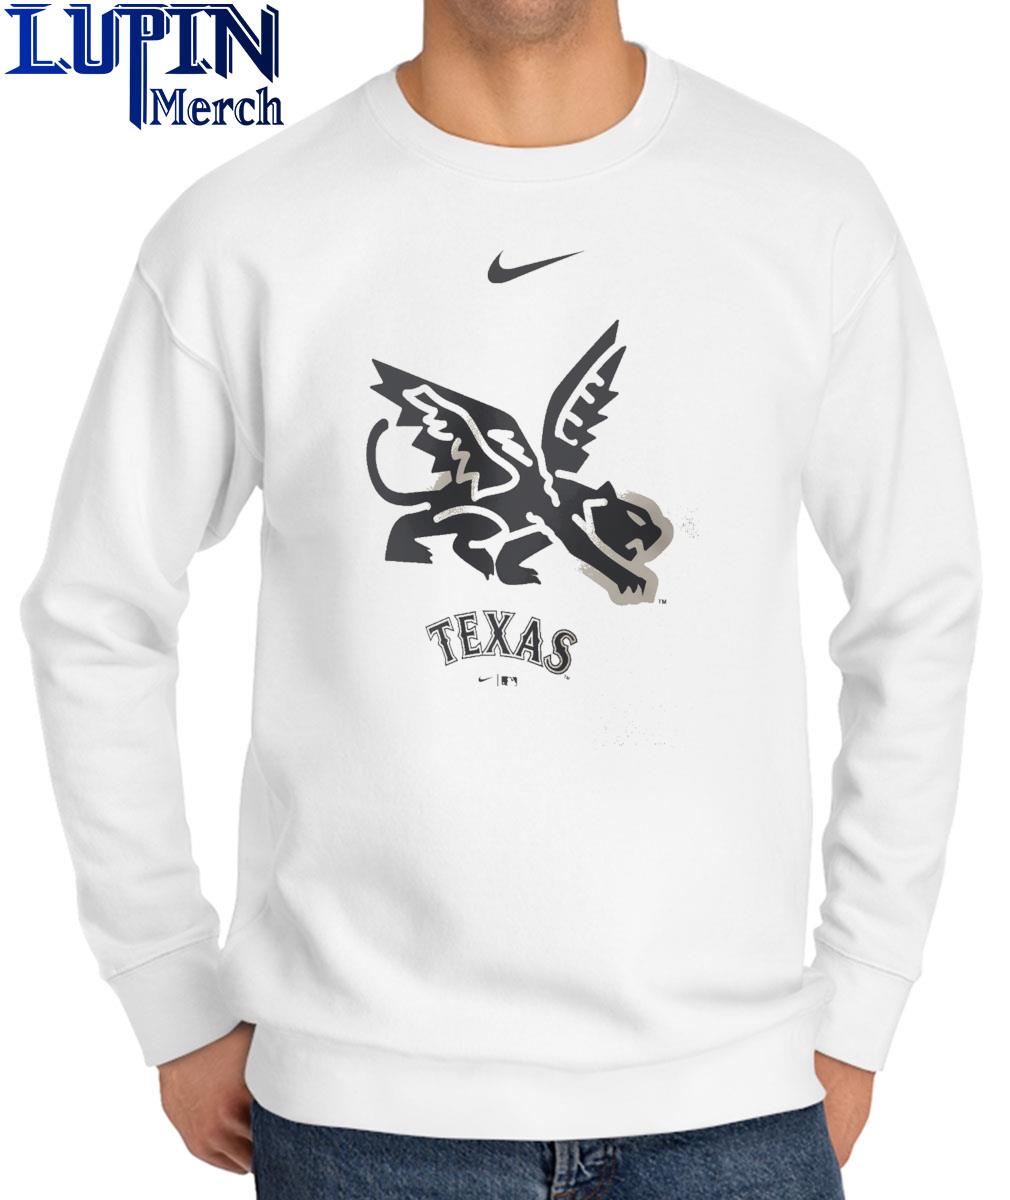 Texas rangers Texas peagle shirt, hoodie, sweater, long sleeve and